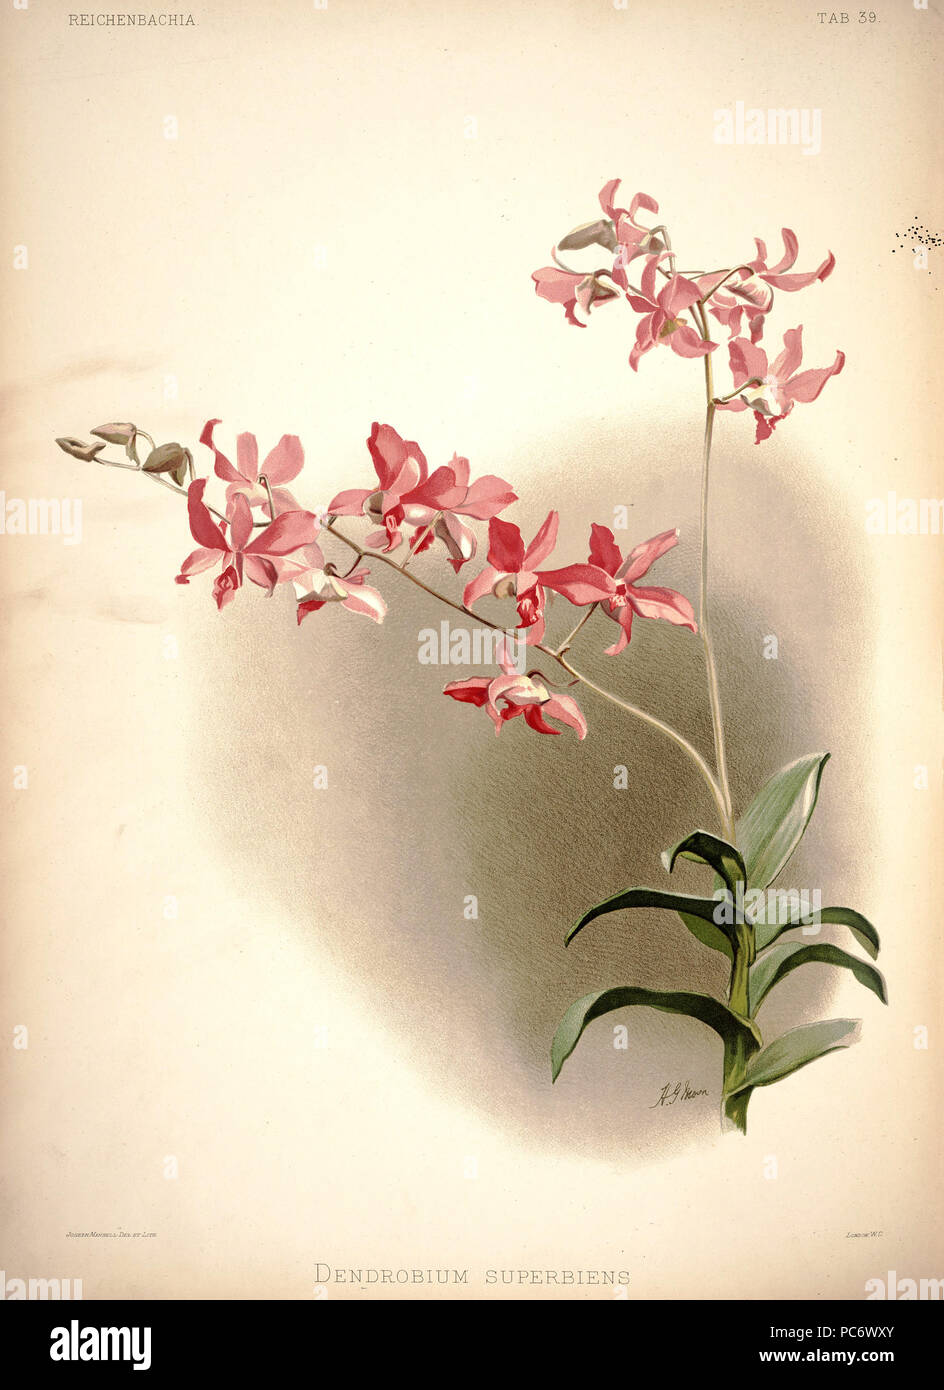 220 Frederick Sander - Reichenbachia I plate 39 (1888) - Dendrobium superbiens Stock Photo